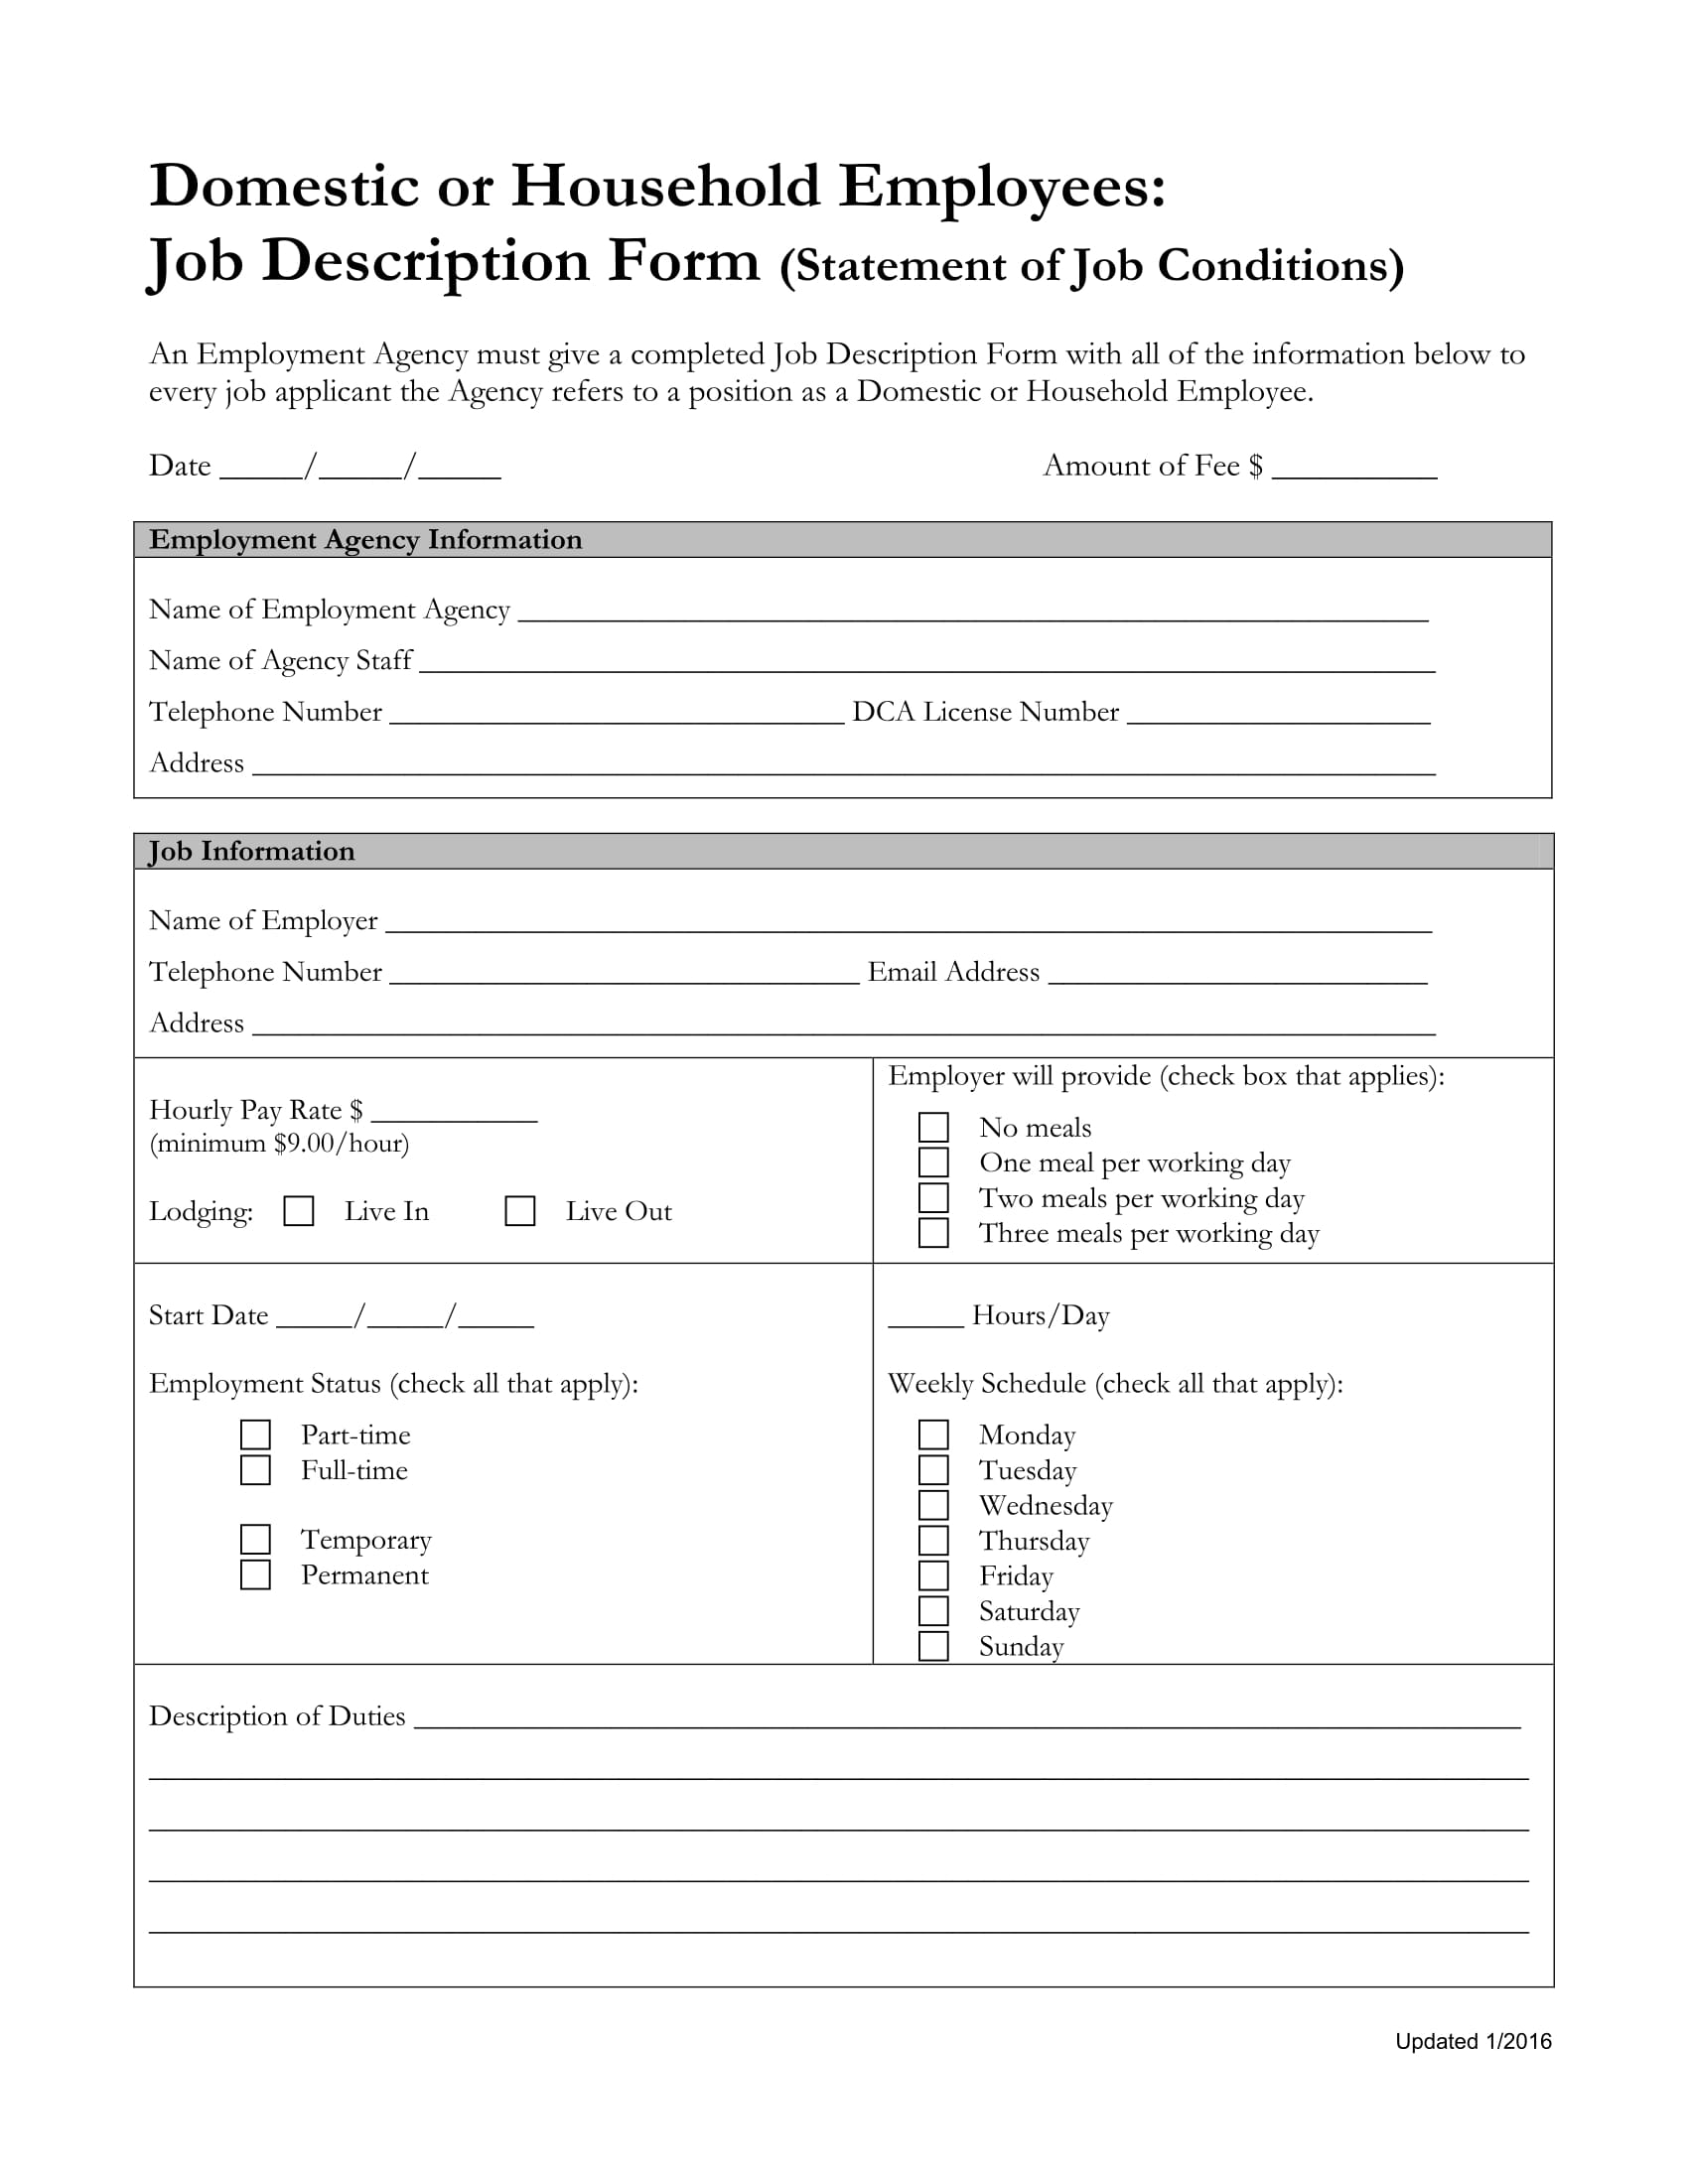 domestic employee job description form 1